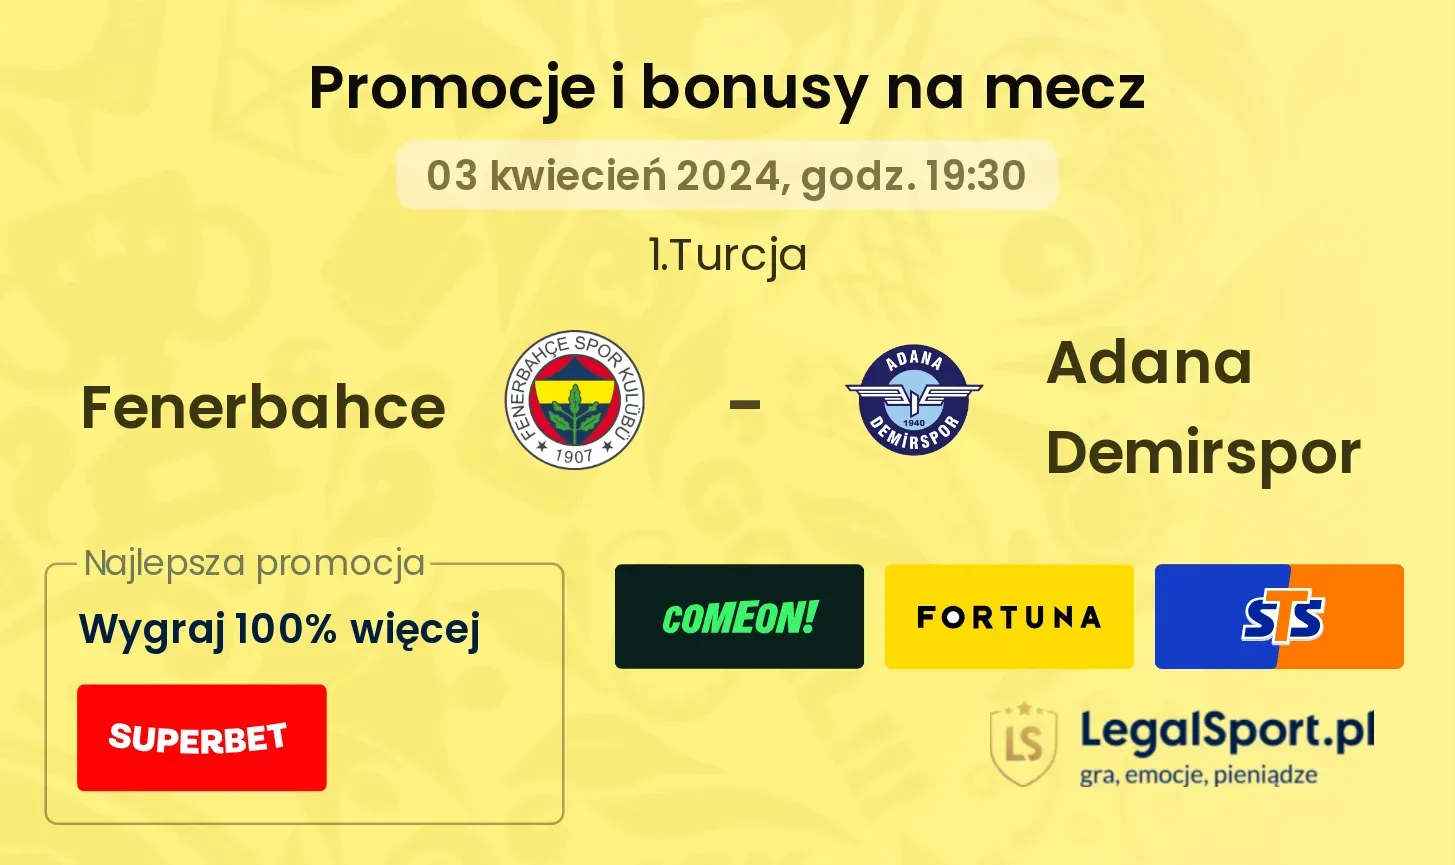 Fenerbahce - Adana Demirspor promocje bonusy na mecz